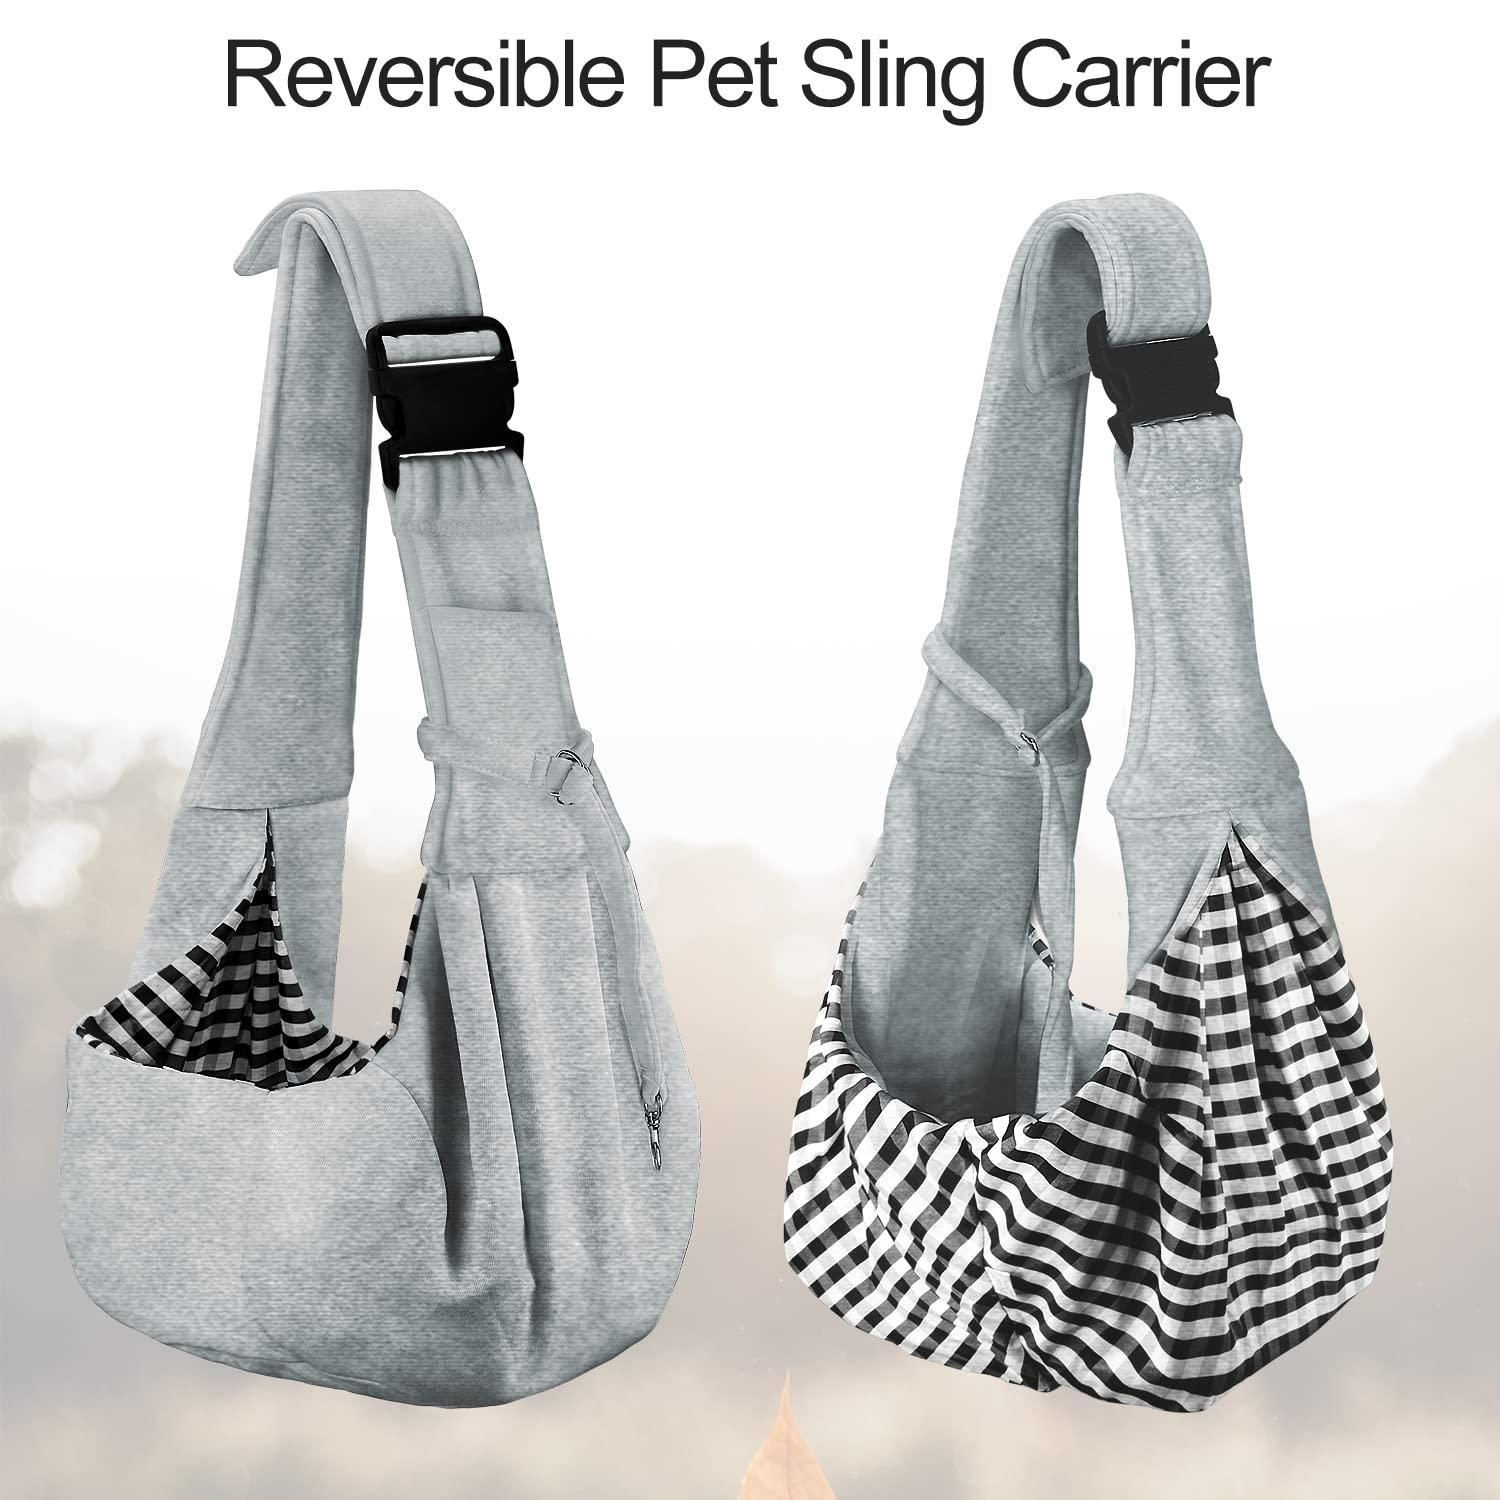 Katziela Expandable Pet Carrier Sling Bag - Gray